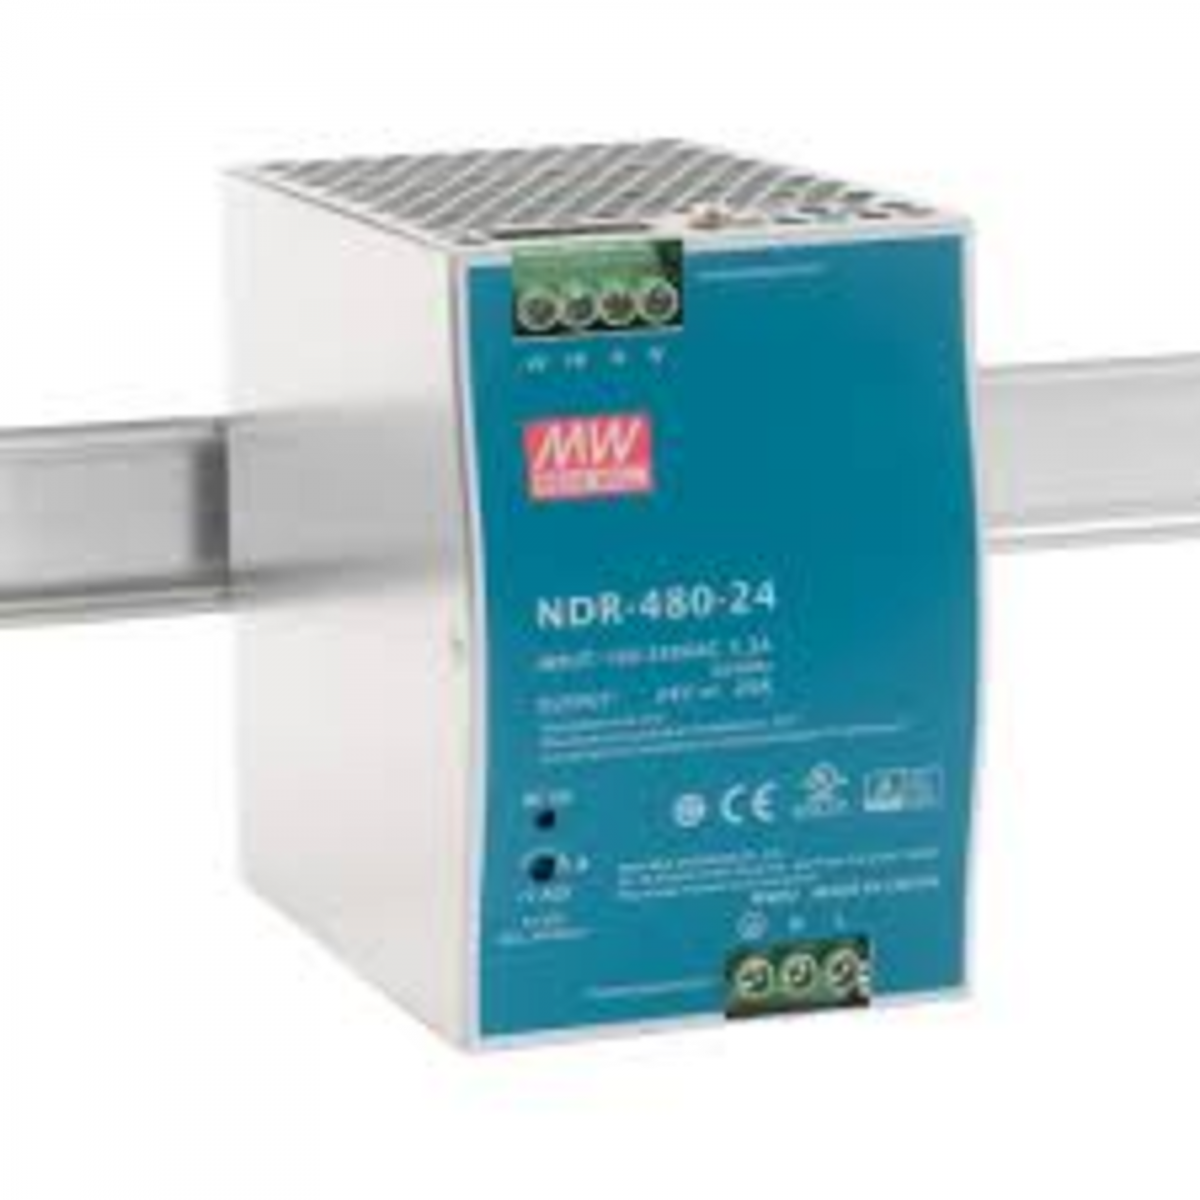 NDR-480-24 Блок питания на DIN-рейку, 24В, 20 А, 480Вт Mean Well